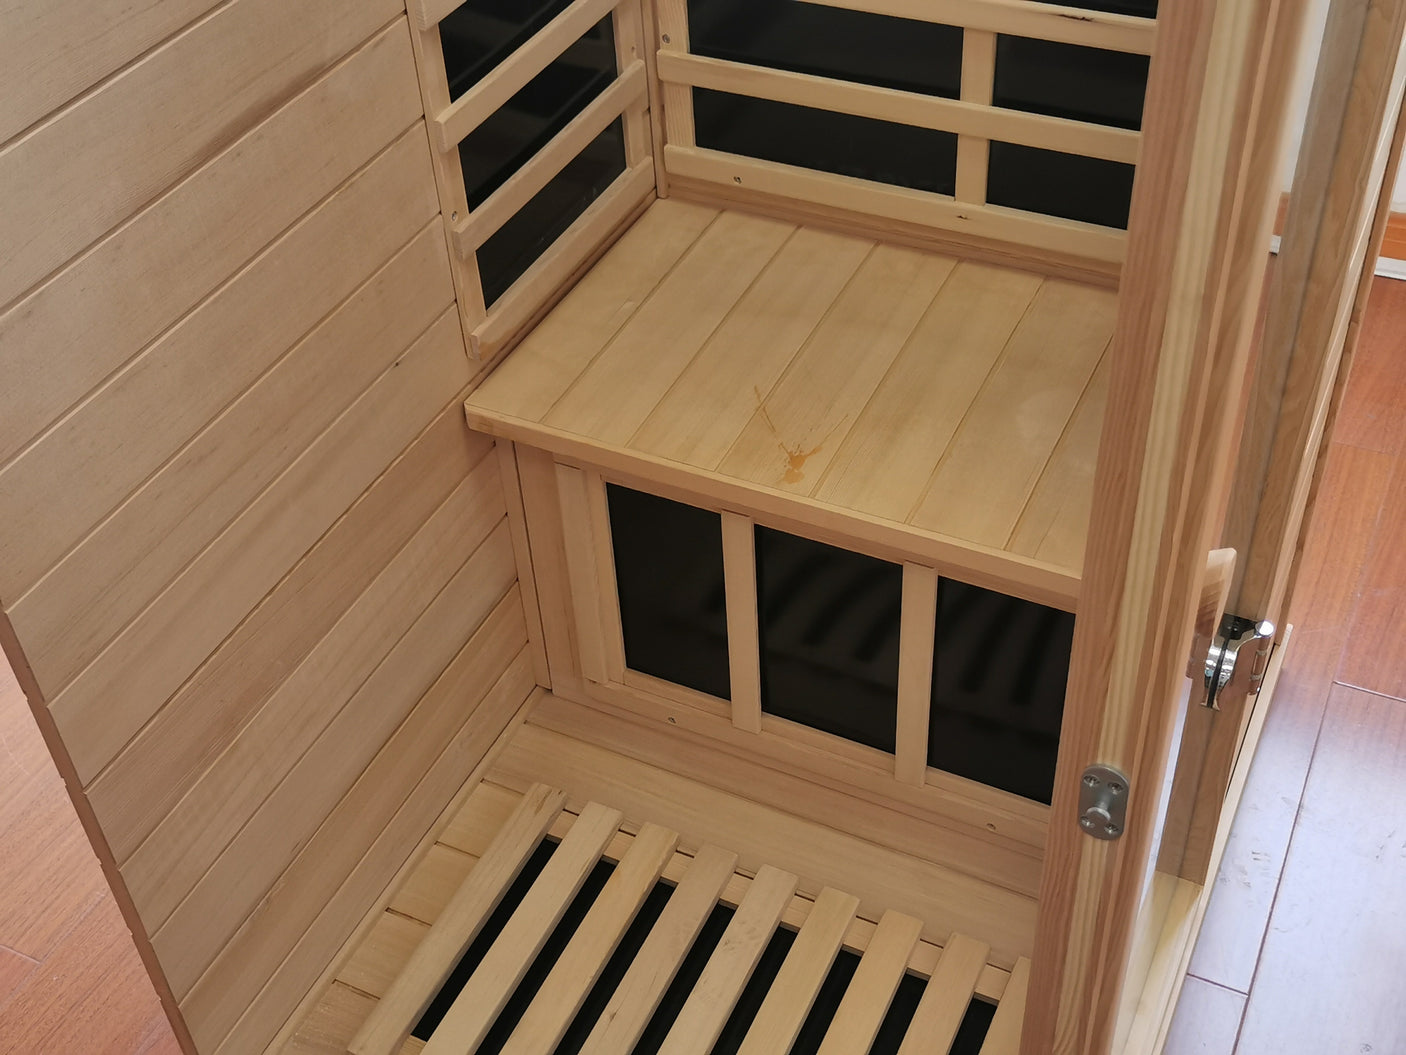 Mini Left Side  Hemlock Sauna Room